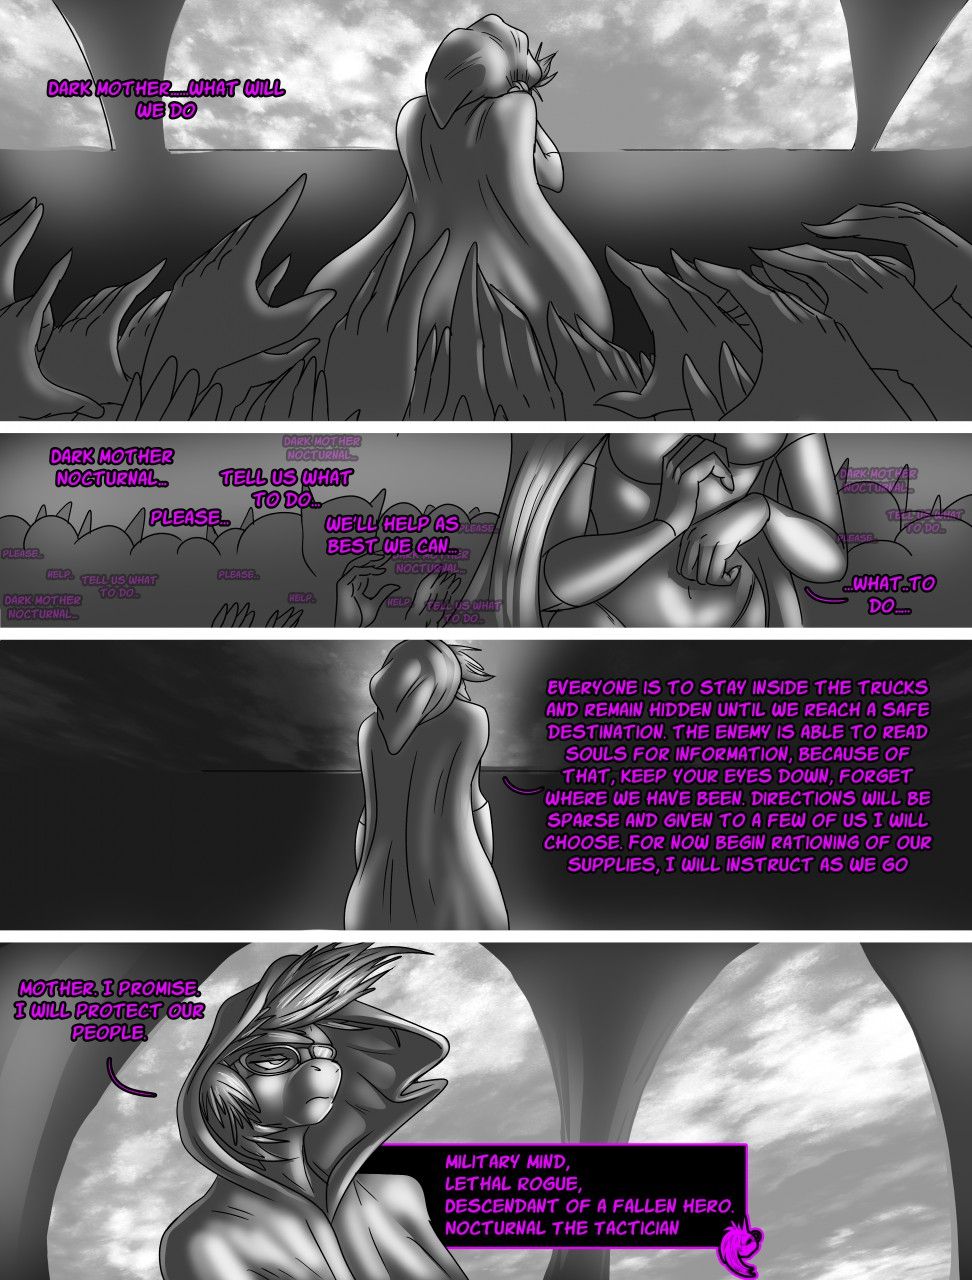 [TheBigBadWolf] Firedrive24 Comic: Rise of the Dark Goddess CH:1-3 (Ongoing) 20